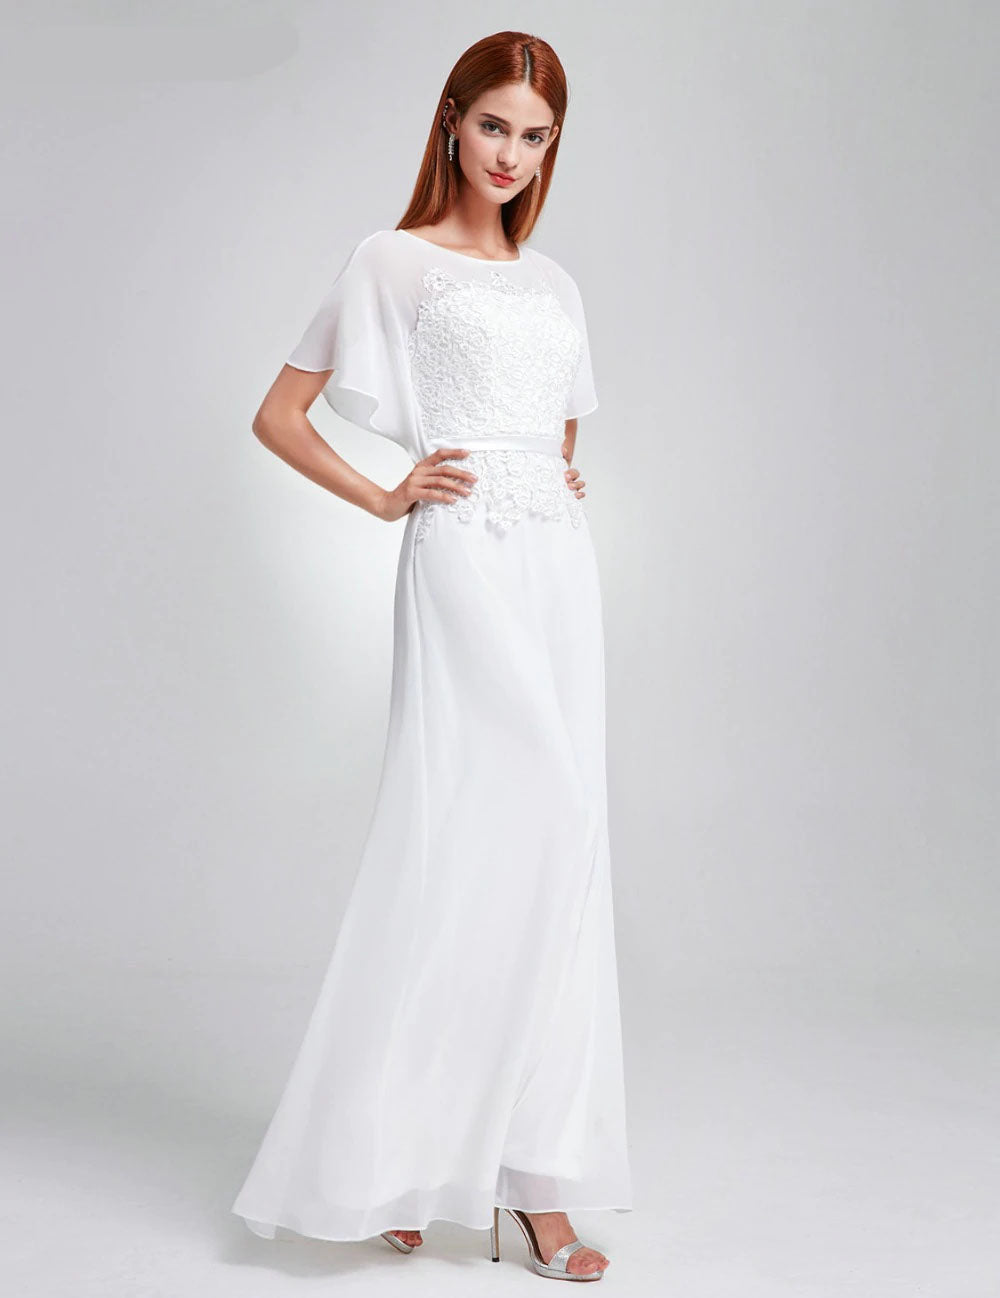 The Bernice :: Vintage Style Lace Overlay Soft Chiffon A-Line Wedding Dress